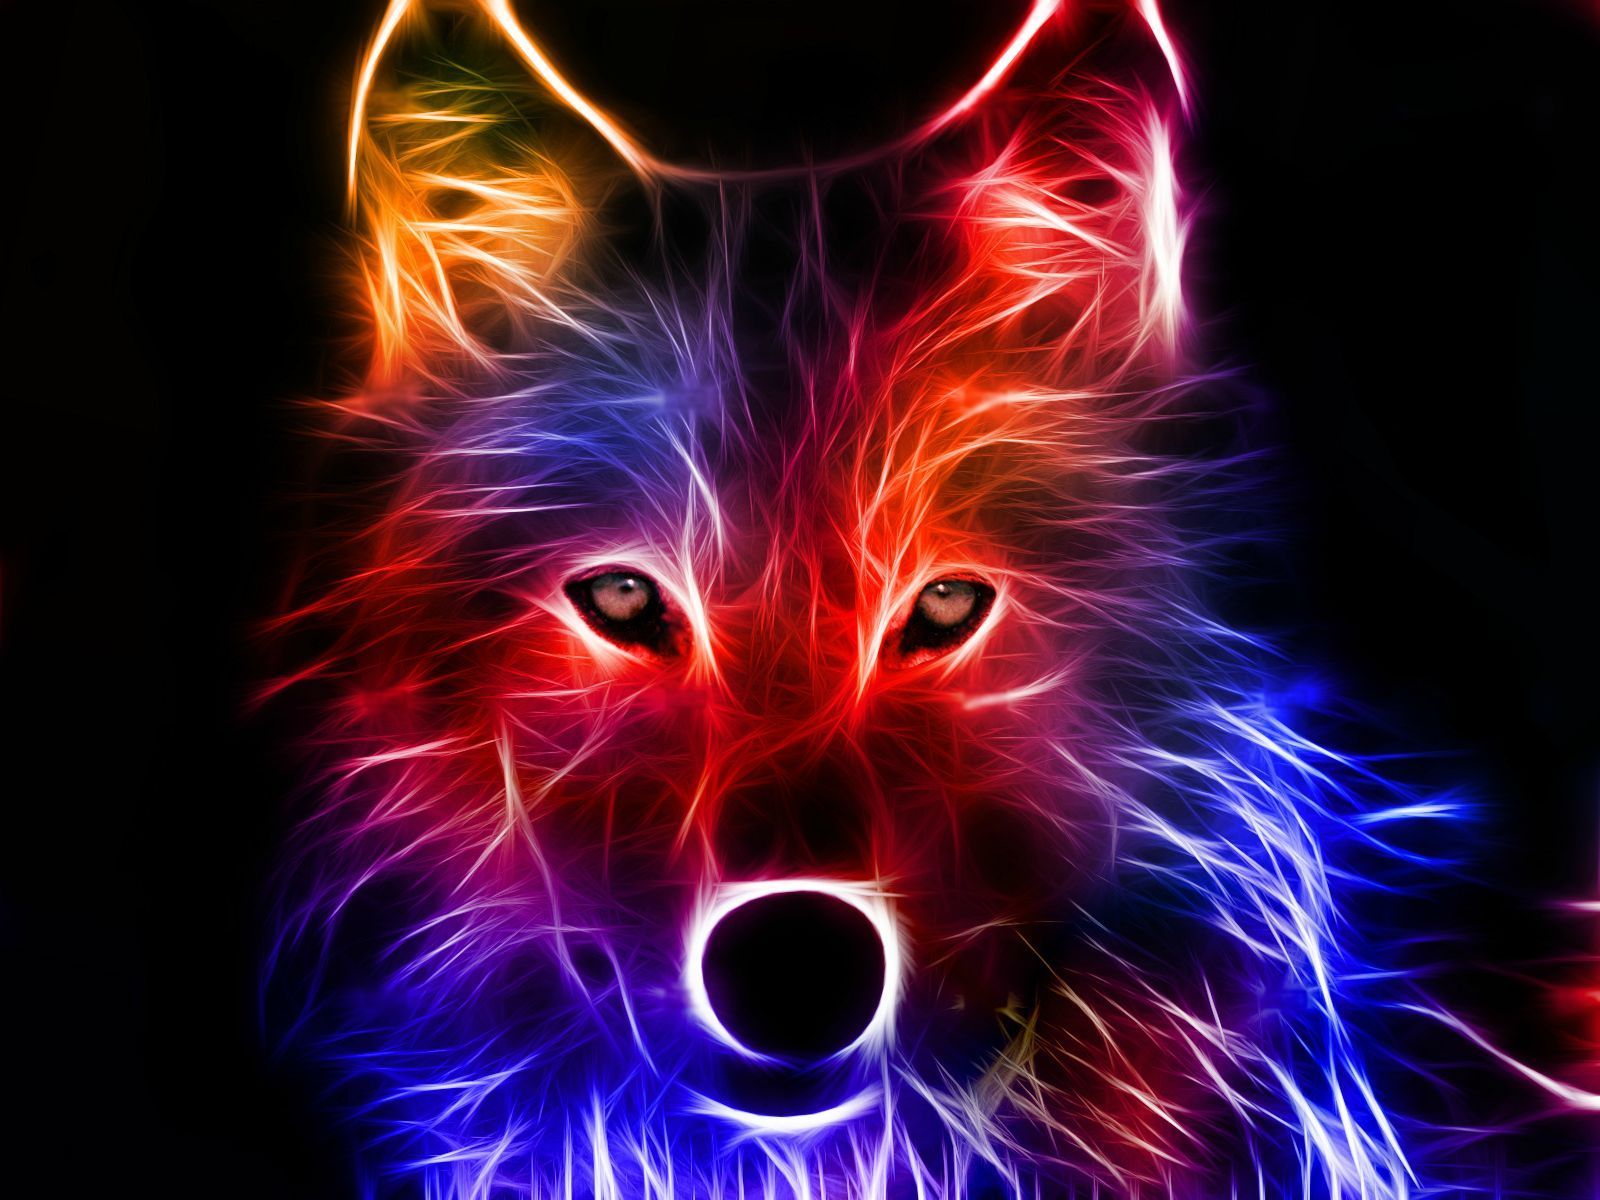 Wonderful 3D wolf Wild Animal in fire - Digital art design